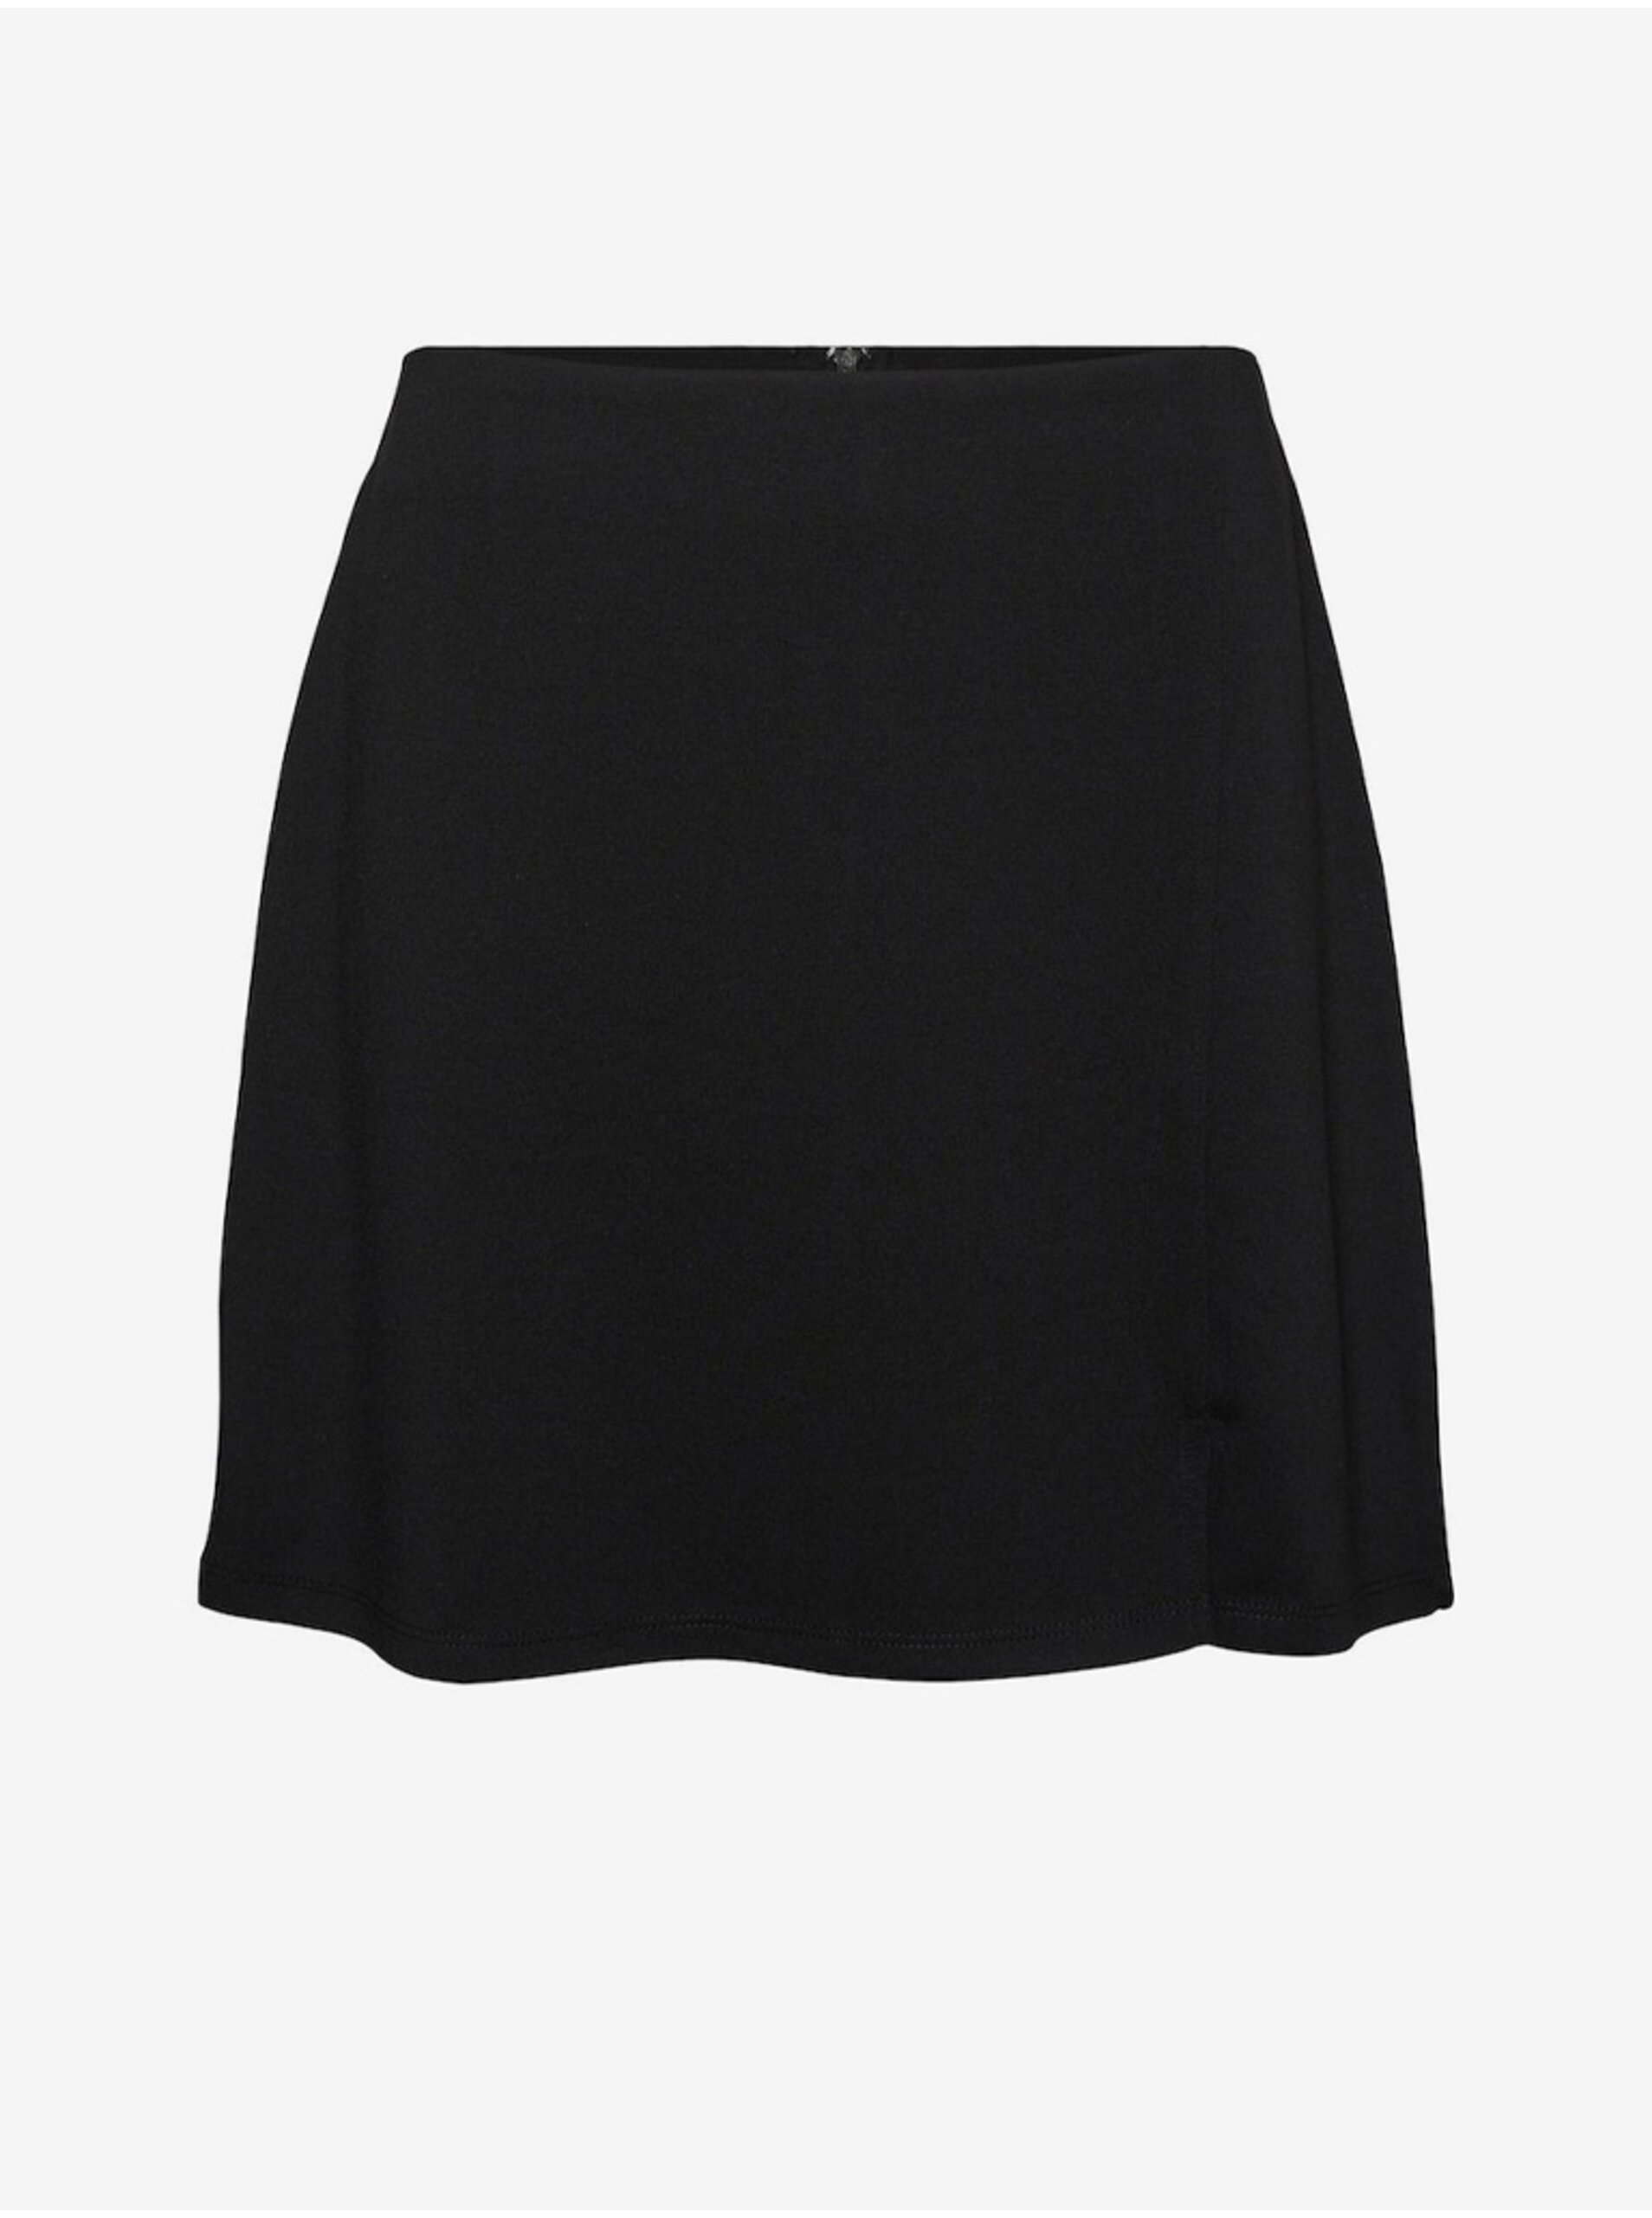 Black women's skirt Vero Moda Abby - Women